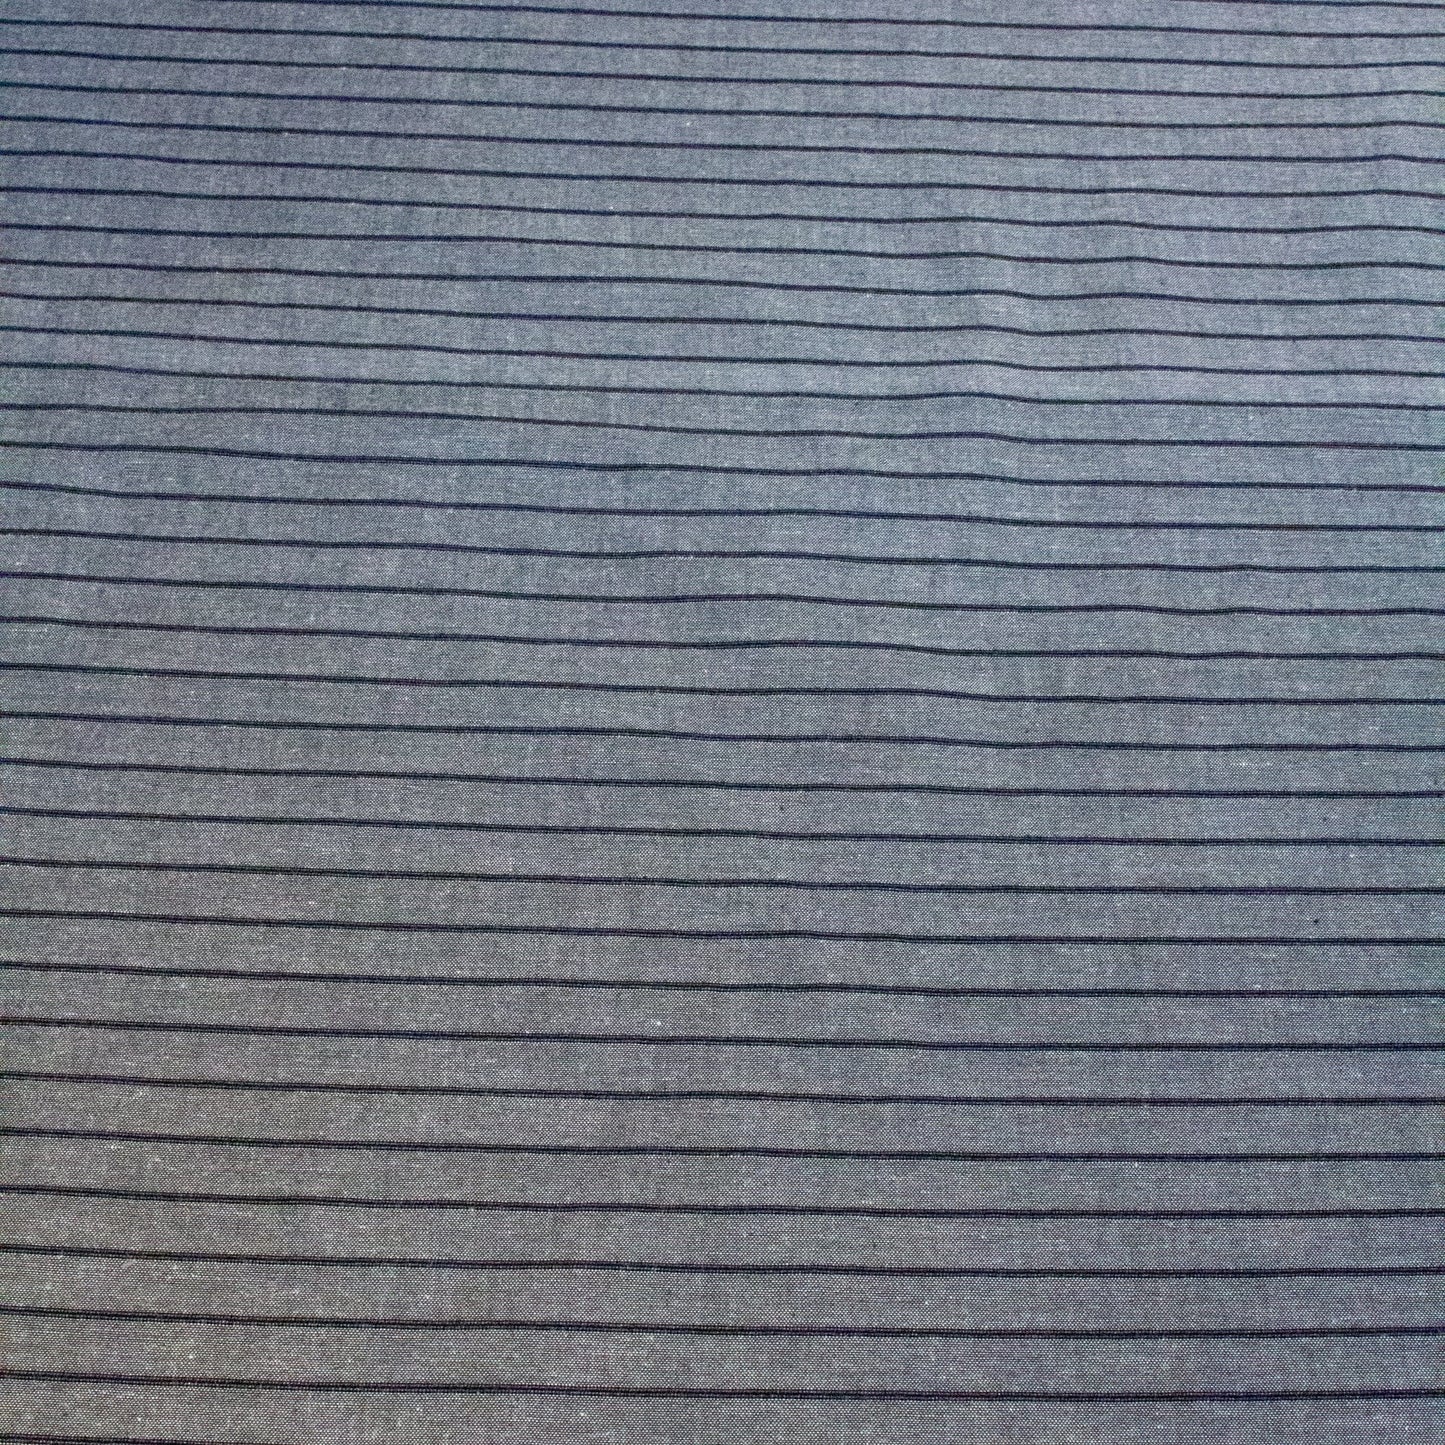 Organic Cotton Handwoven Crossweave Fabric in Grey with Raised Black Stripes